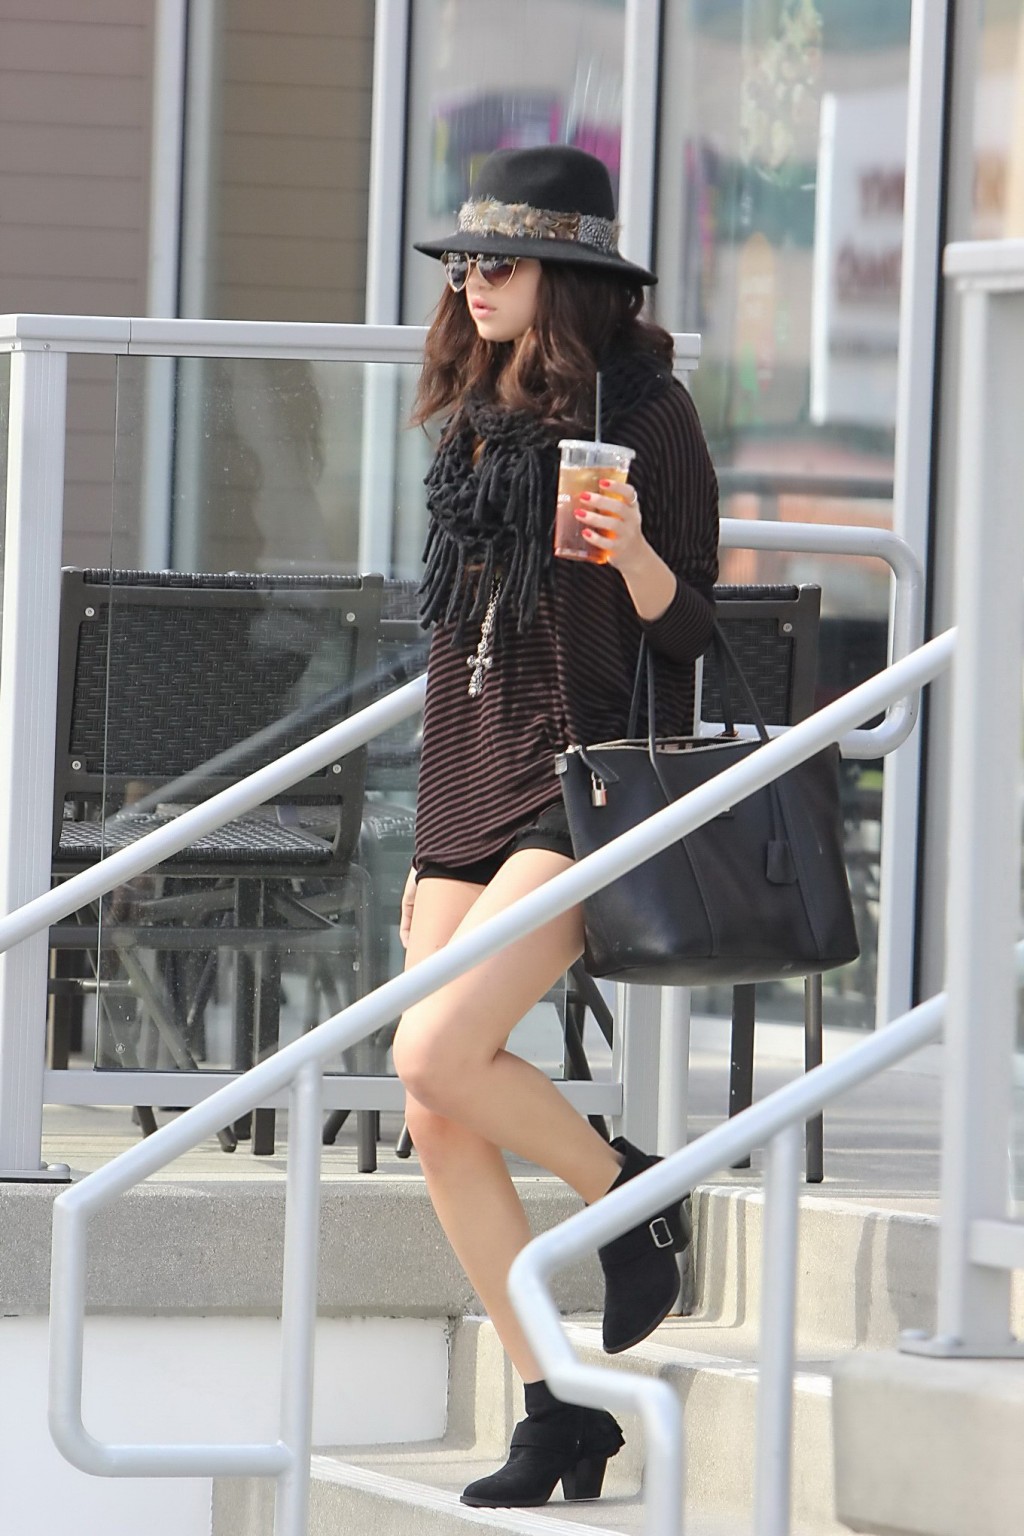 Selena Gomez leggy wearing tiny shorts while leaving Panera Bread in Encino,LA #75242105